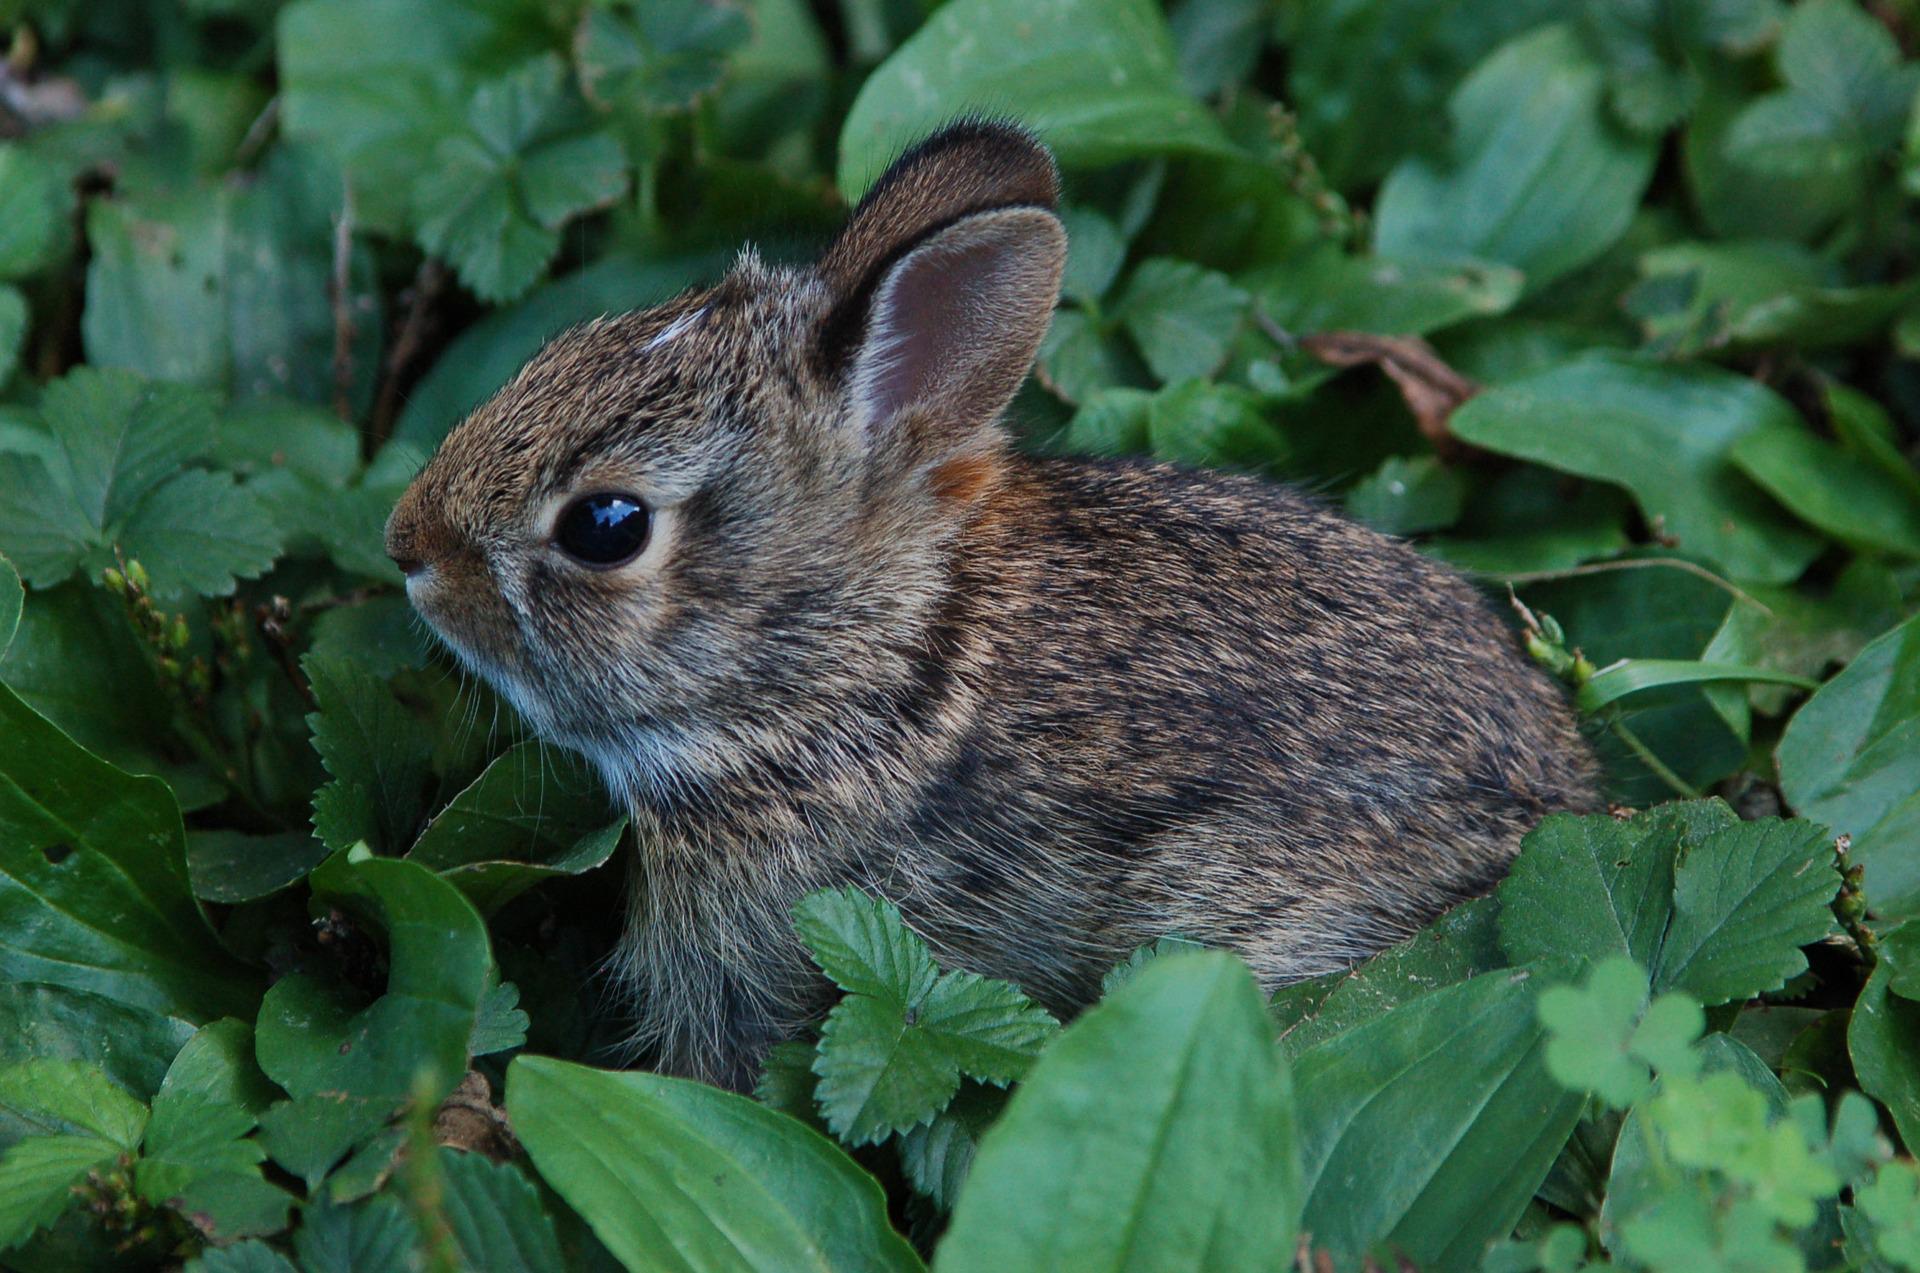 Baby rabbit in greenery.